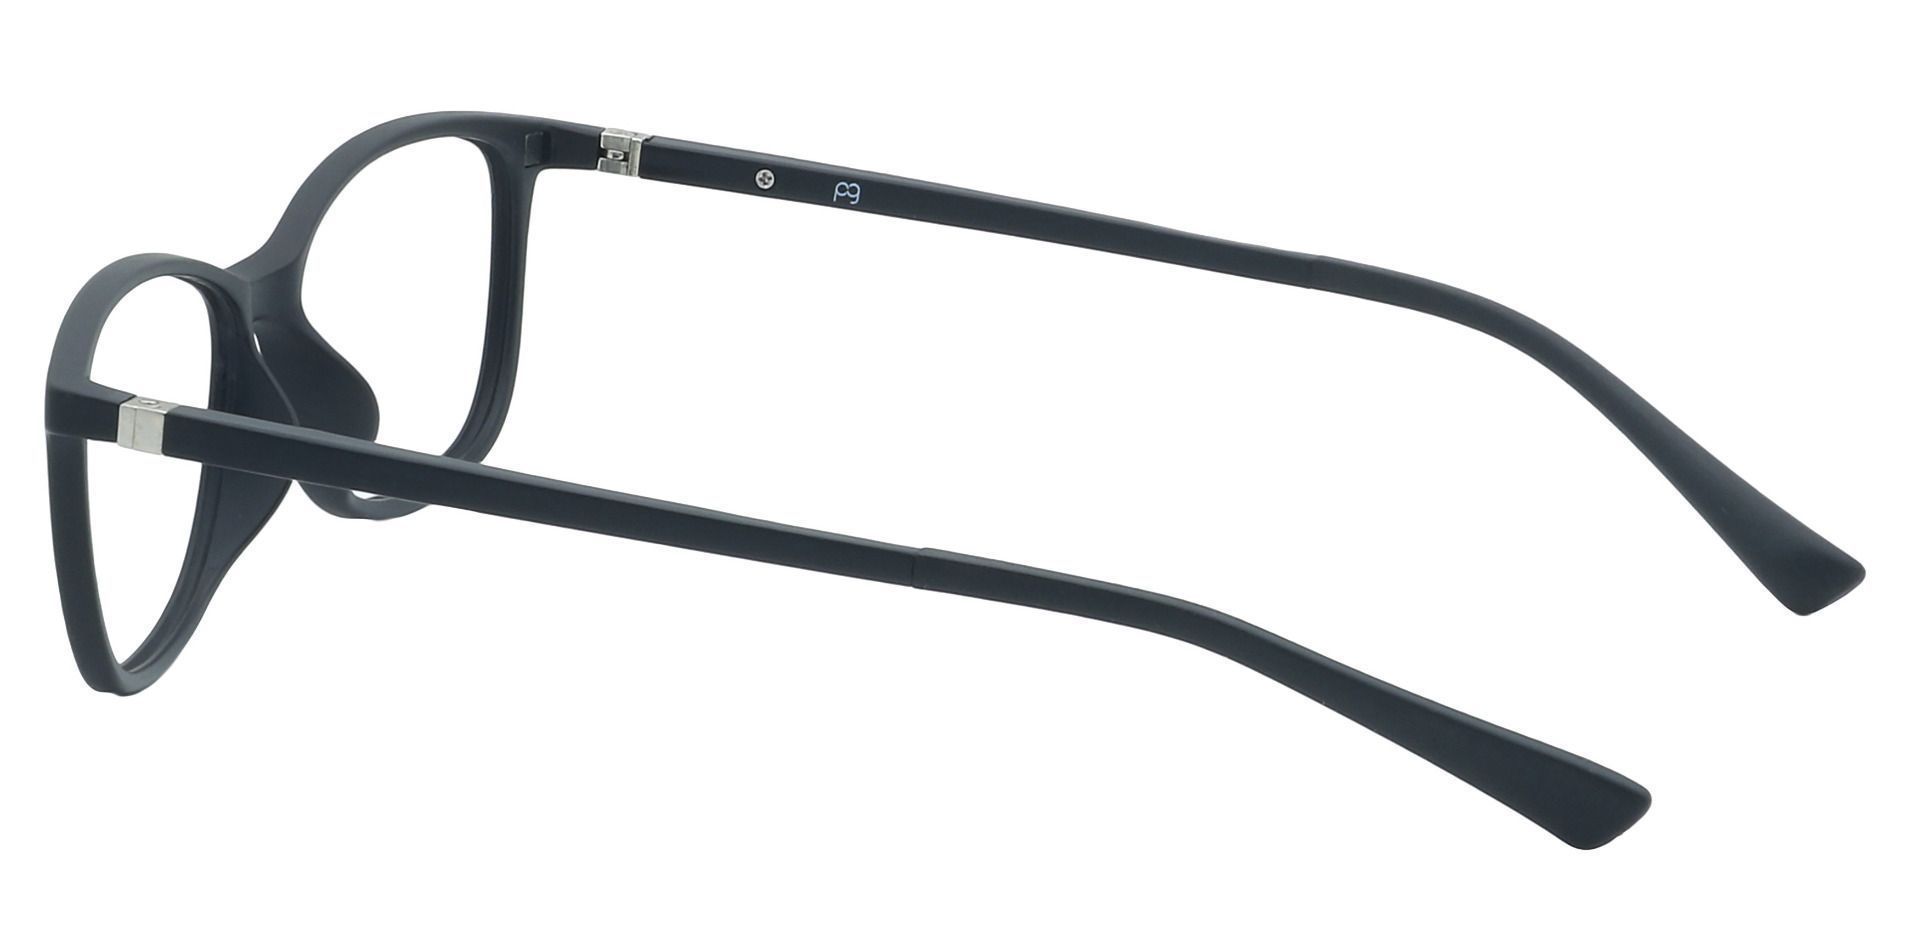 Nia Oval Lined Bifocal Glasses - Black